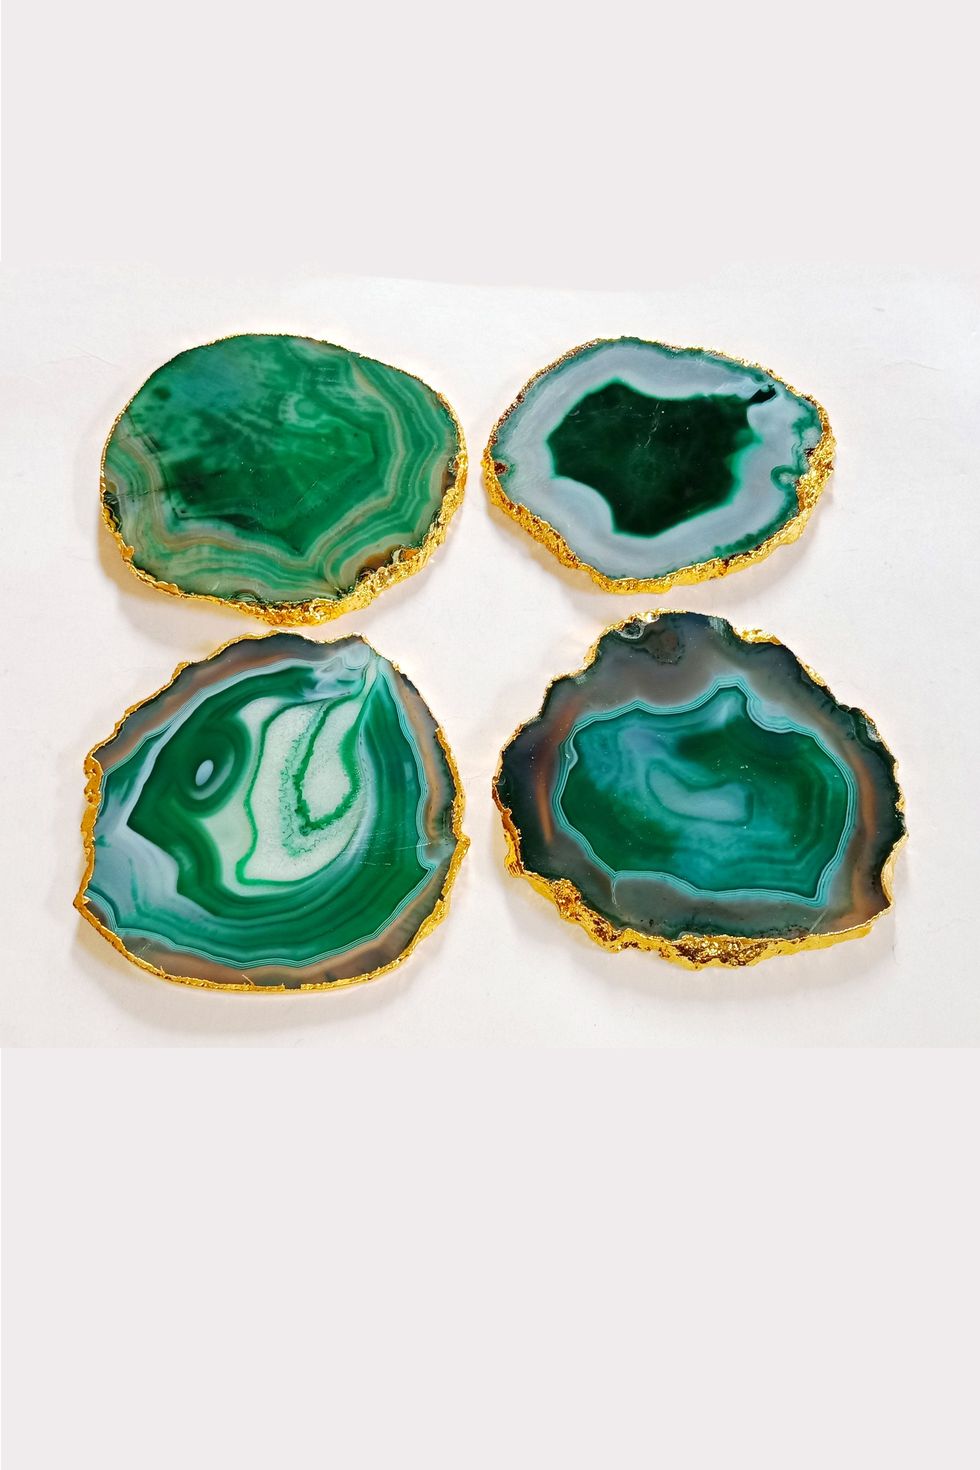 Green Agate Coasters